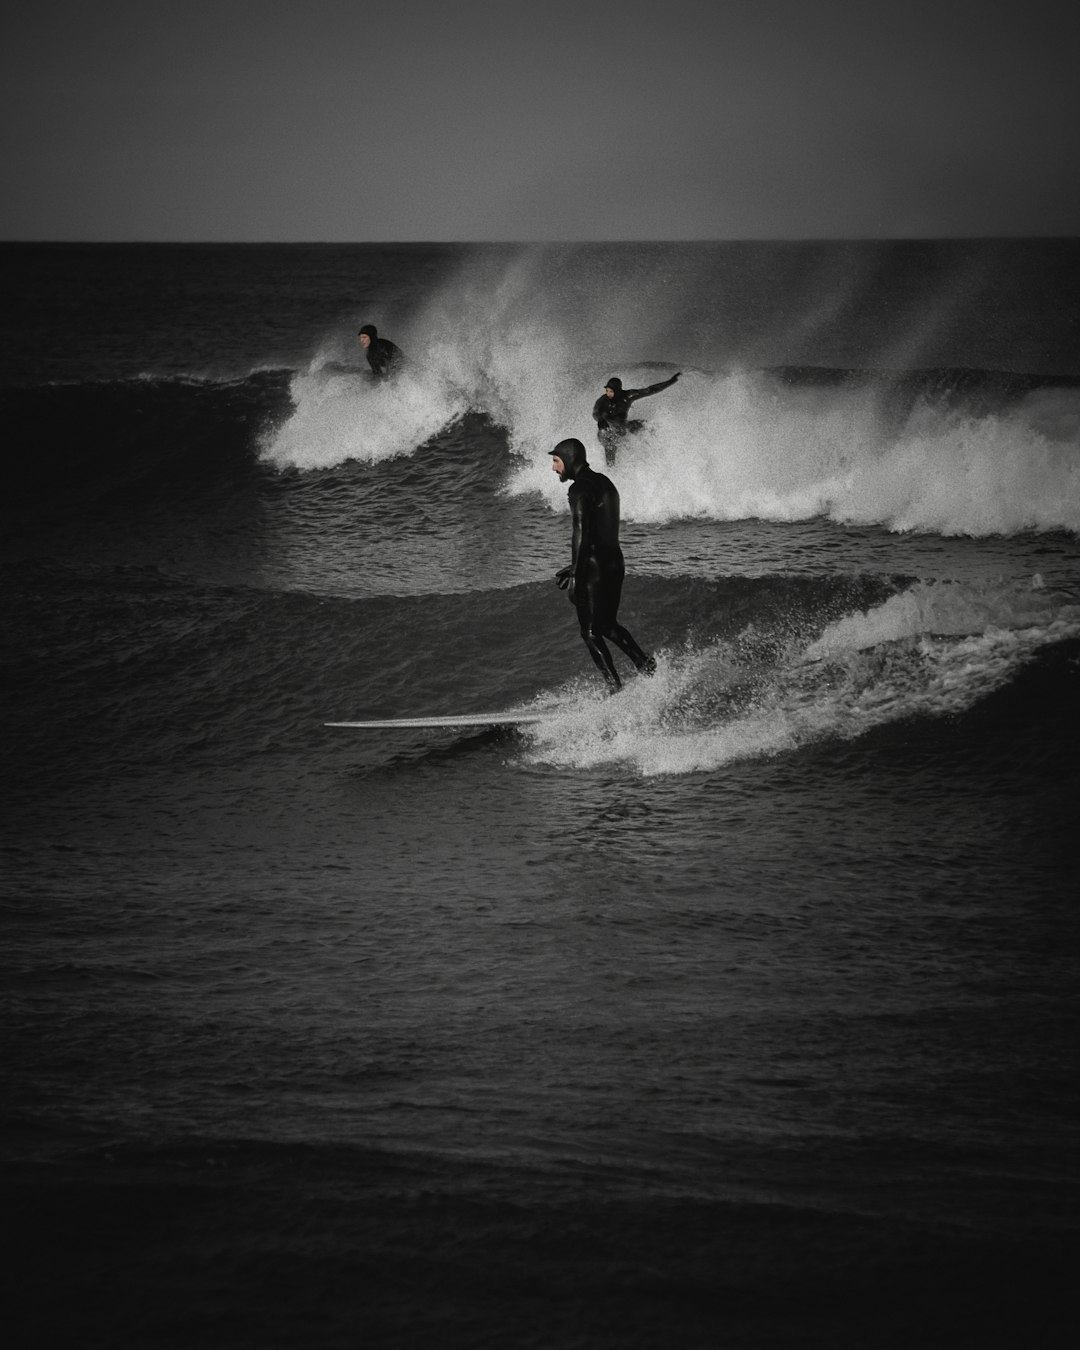 man surfing on sea waves